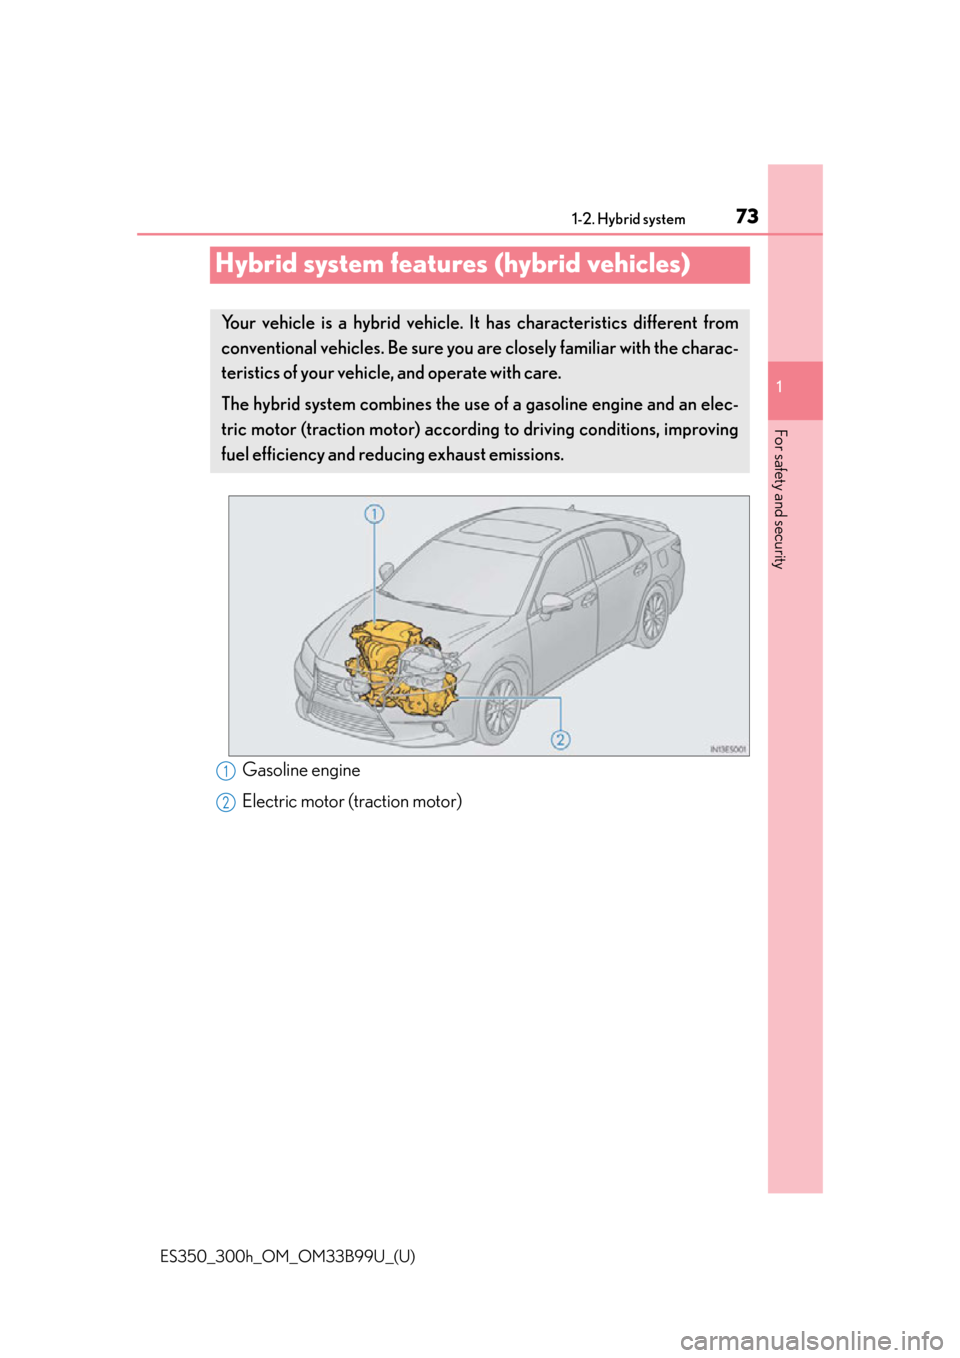 Lexus ES300h 2015  Specifications / Owners Manual (OM33B99U) 731-2. Hybrid system
ES350_300h_OM_OM33B99U_(U)
1
For safety and security
Hybrid system features (hybrid vehicles)
Gasoline engine
Electric motor (traction motor)
Your vehicle is a hybrid vehicle. It 